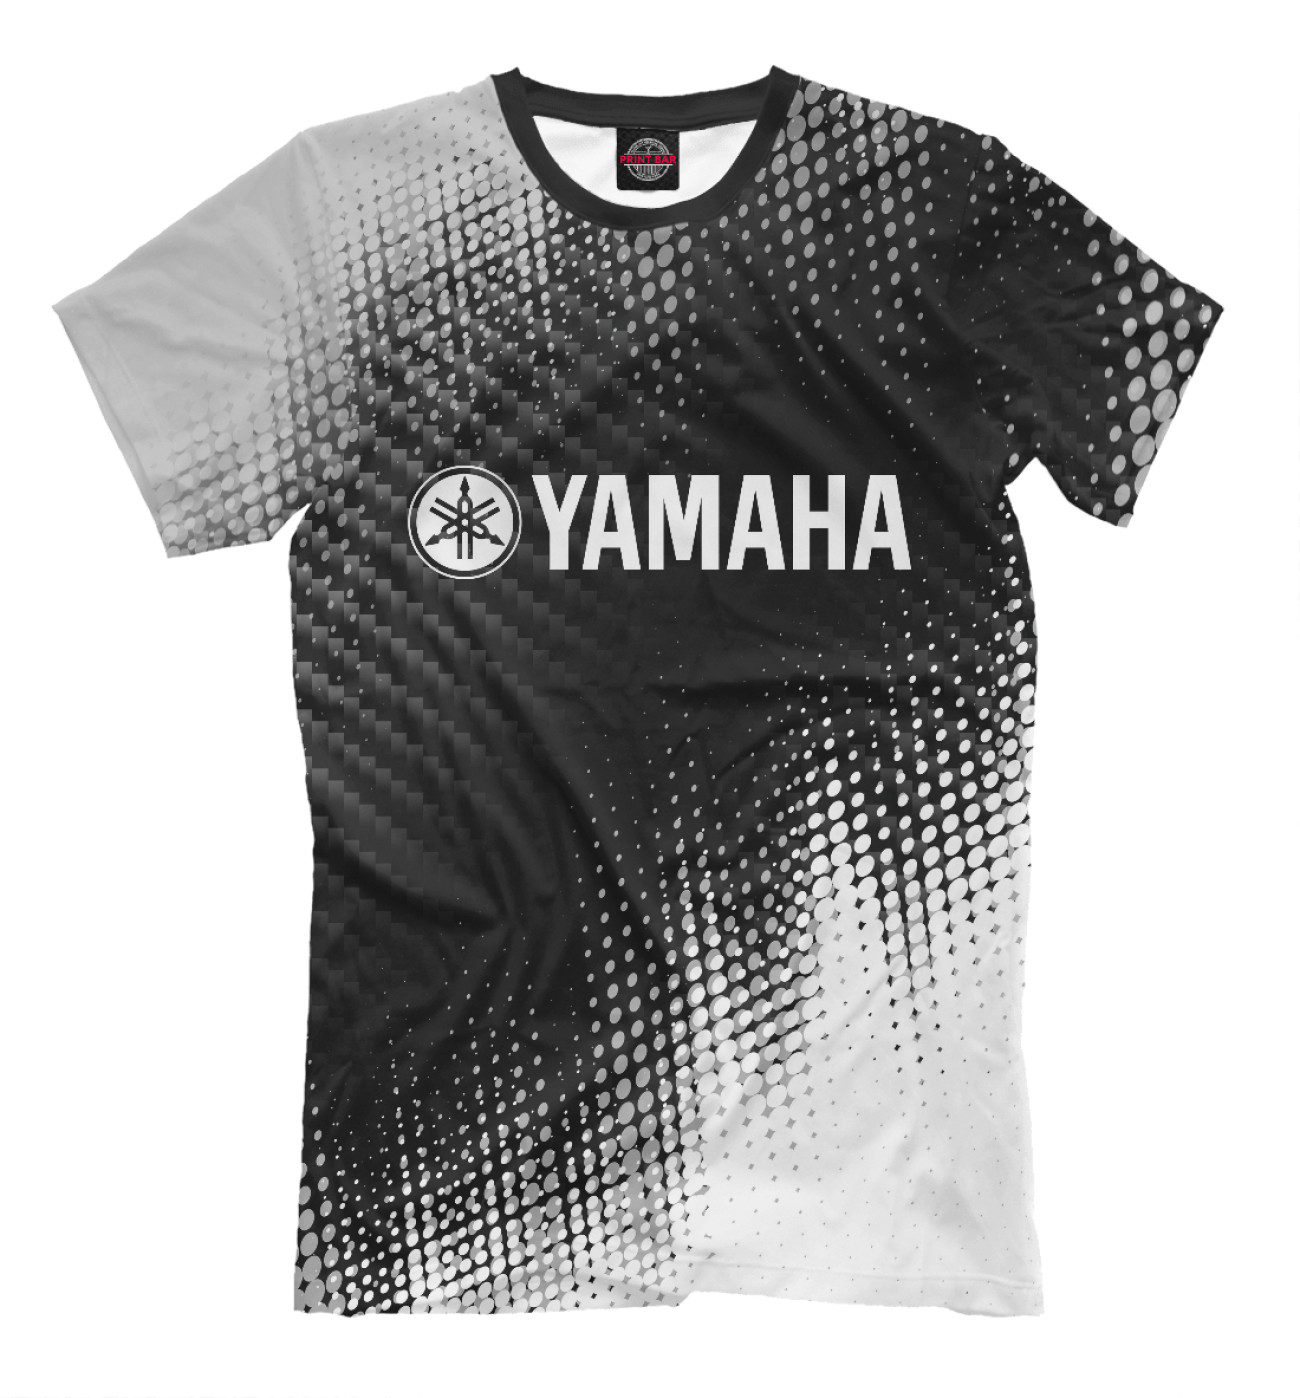 Мужская Футболка Yamaha Motor / Ямаха, артикул: YAM-961740-fut-2